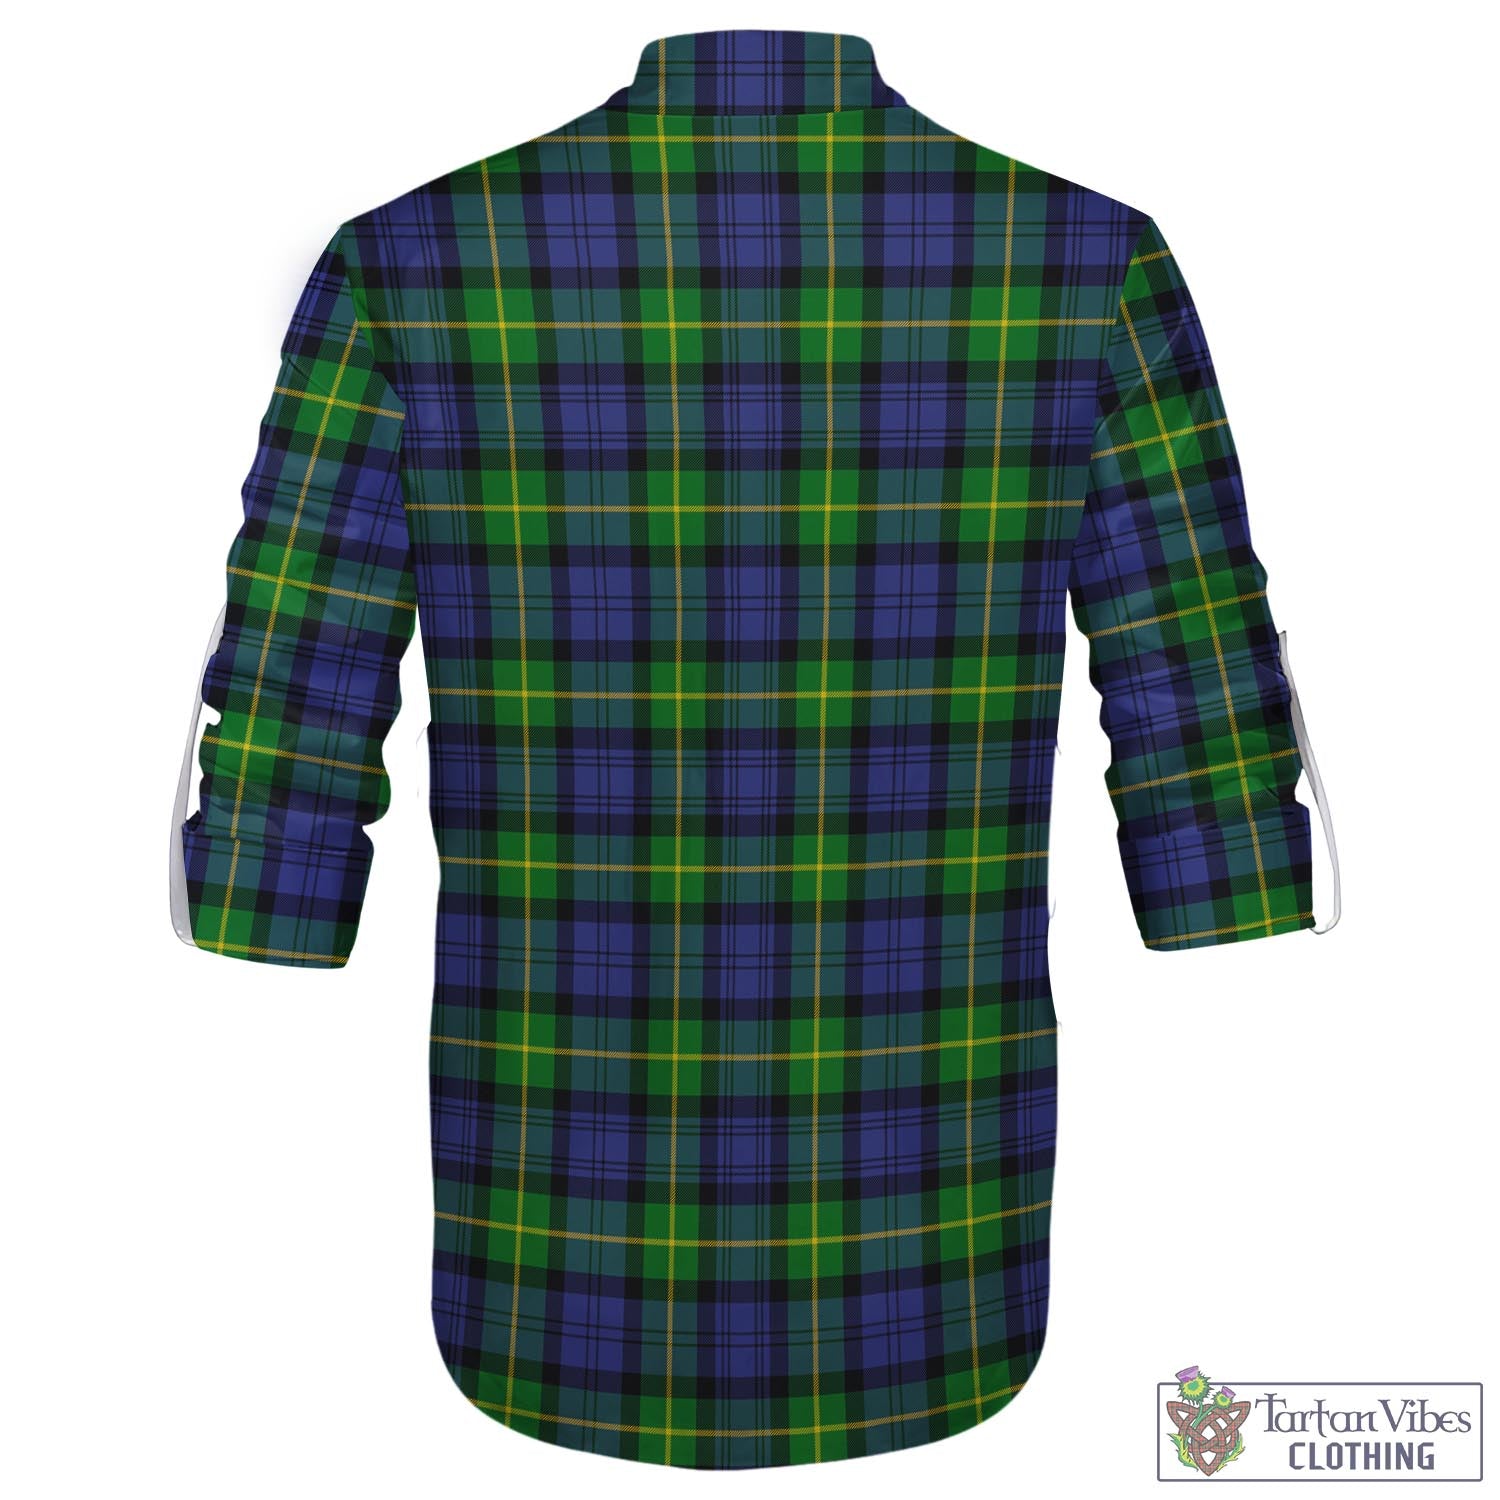 Tartan Vibes Clothing Meldrum Tartan Men's Scottish Traditional Jacobite Ghillie Kilt Shirt